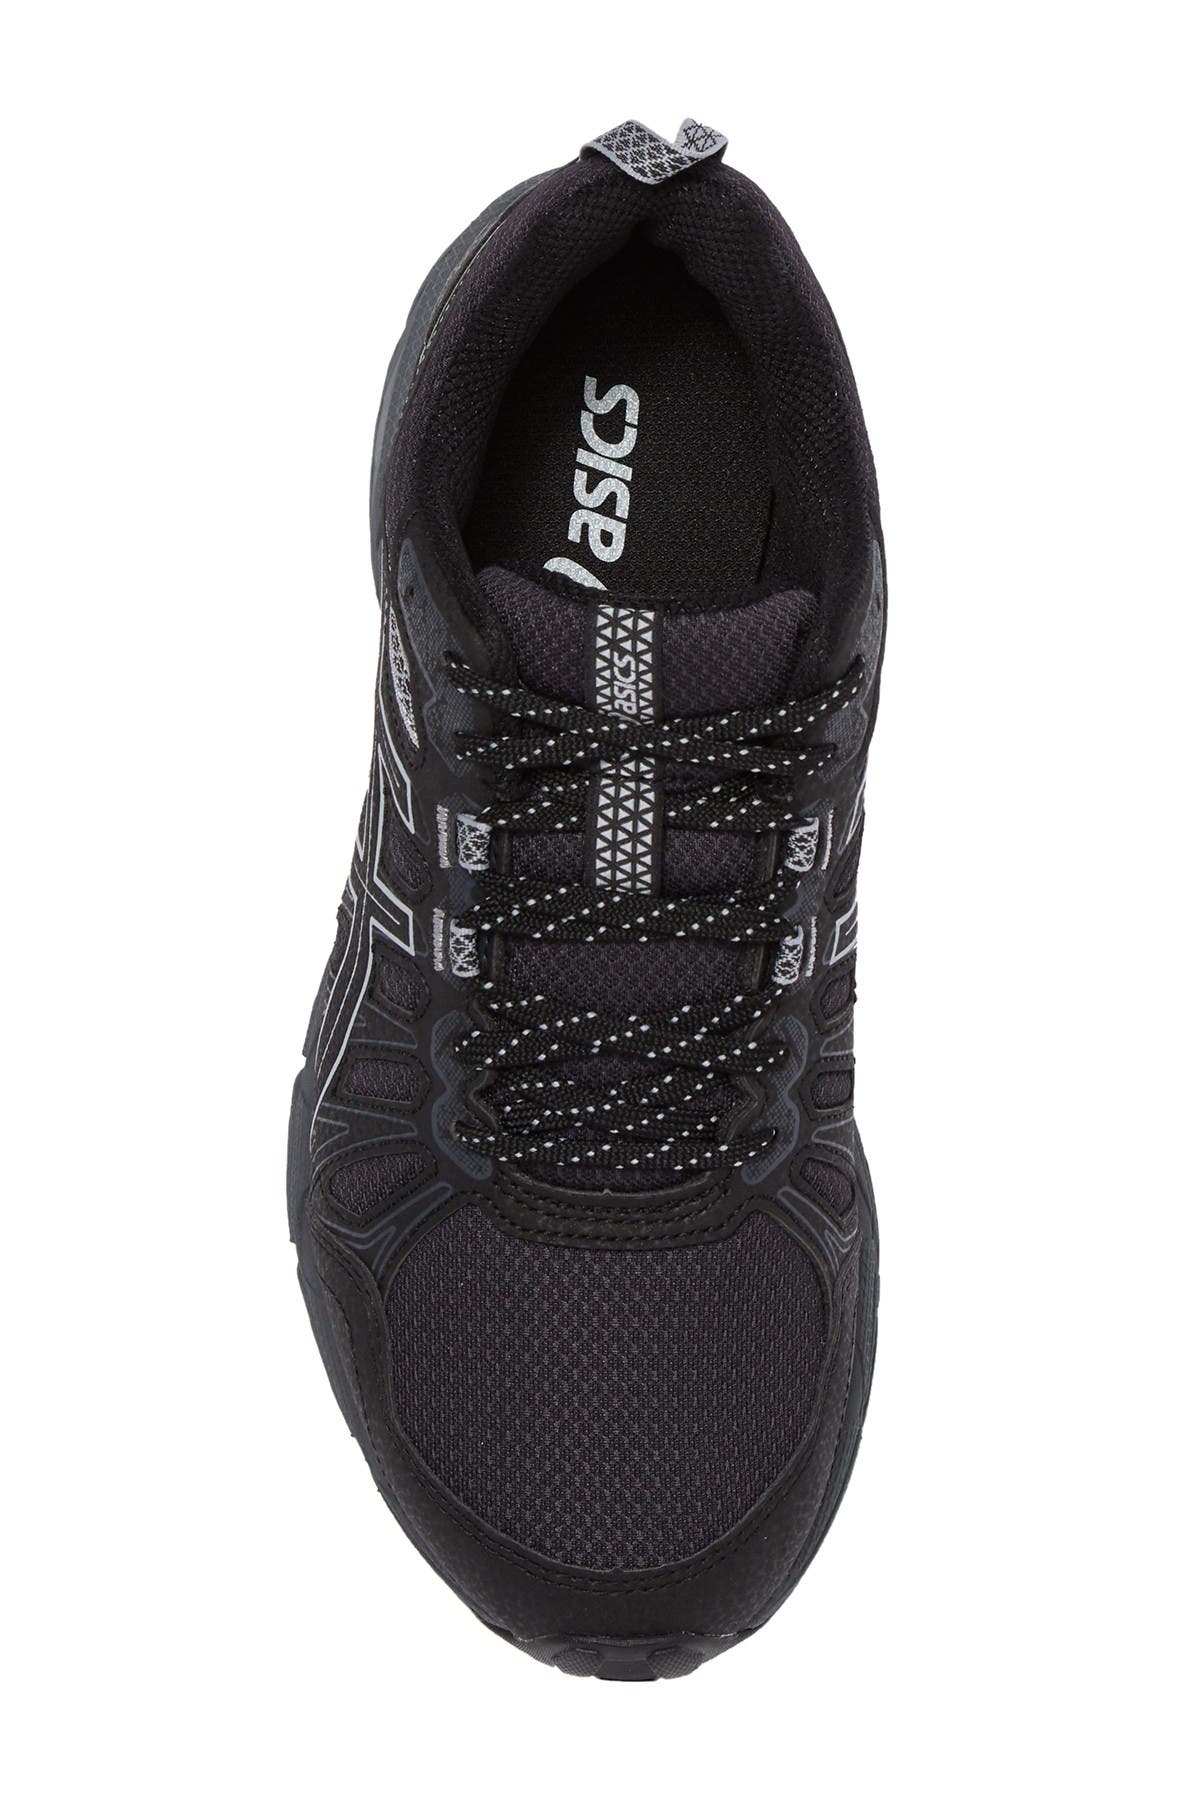 ASICS | GEL-Venture 7 Running Sneaker - Wide Width Available ...